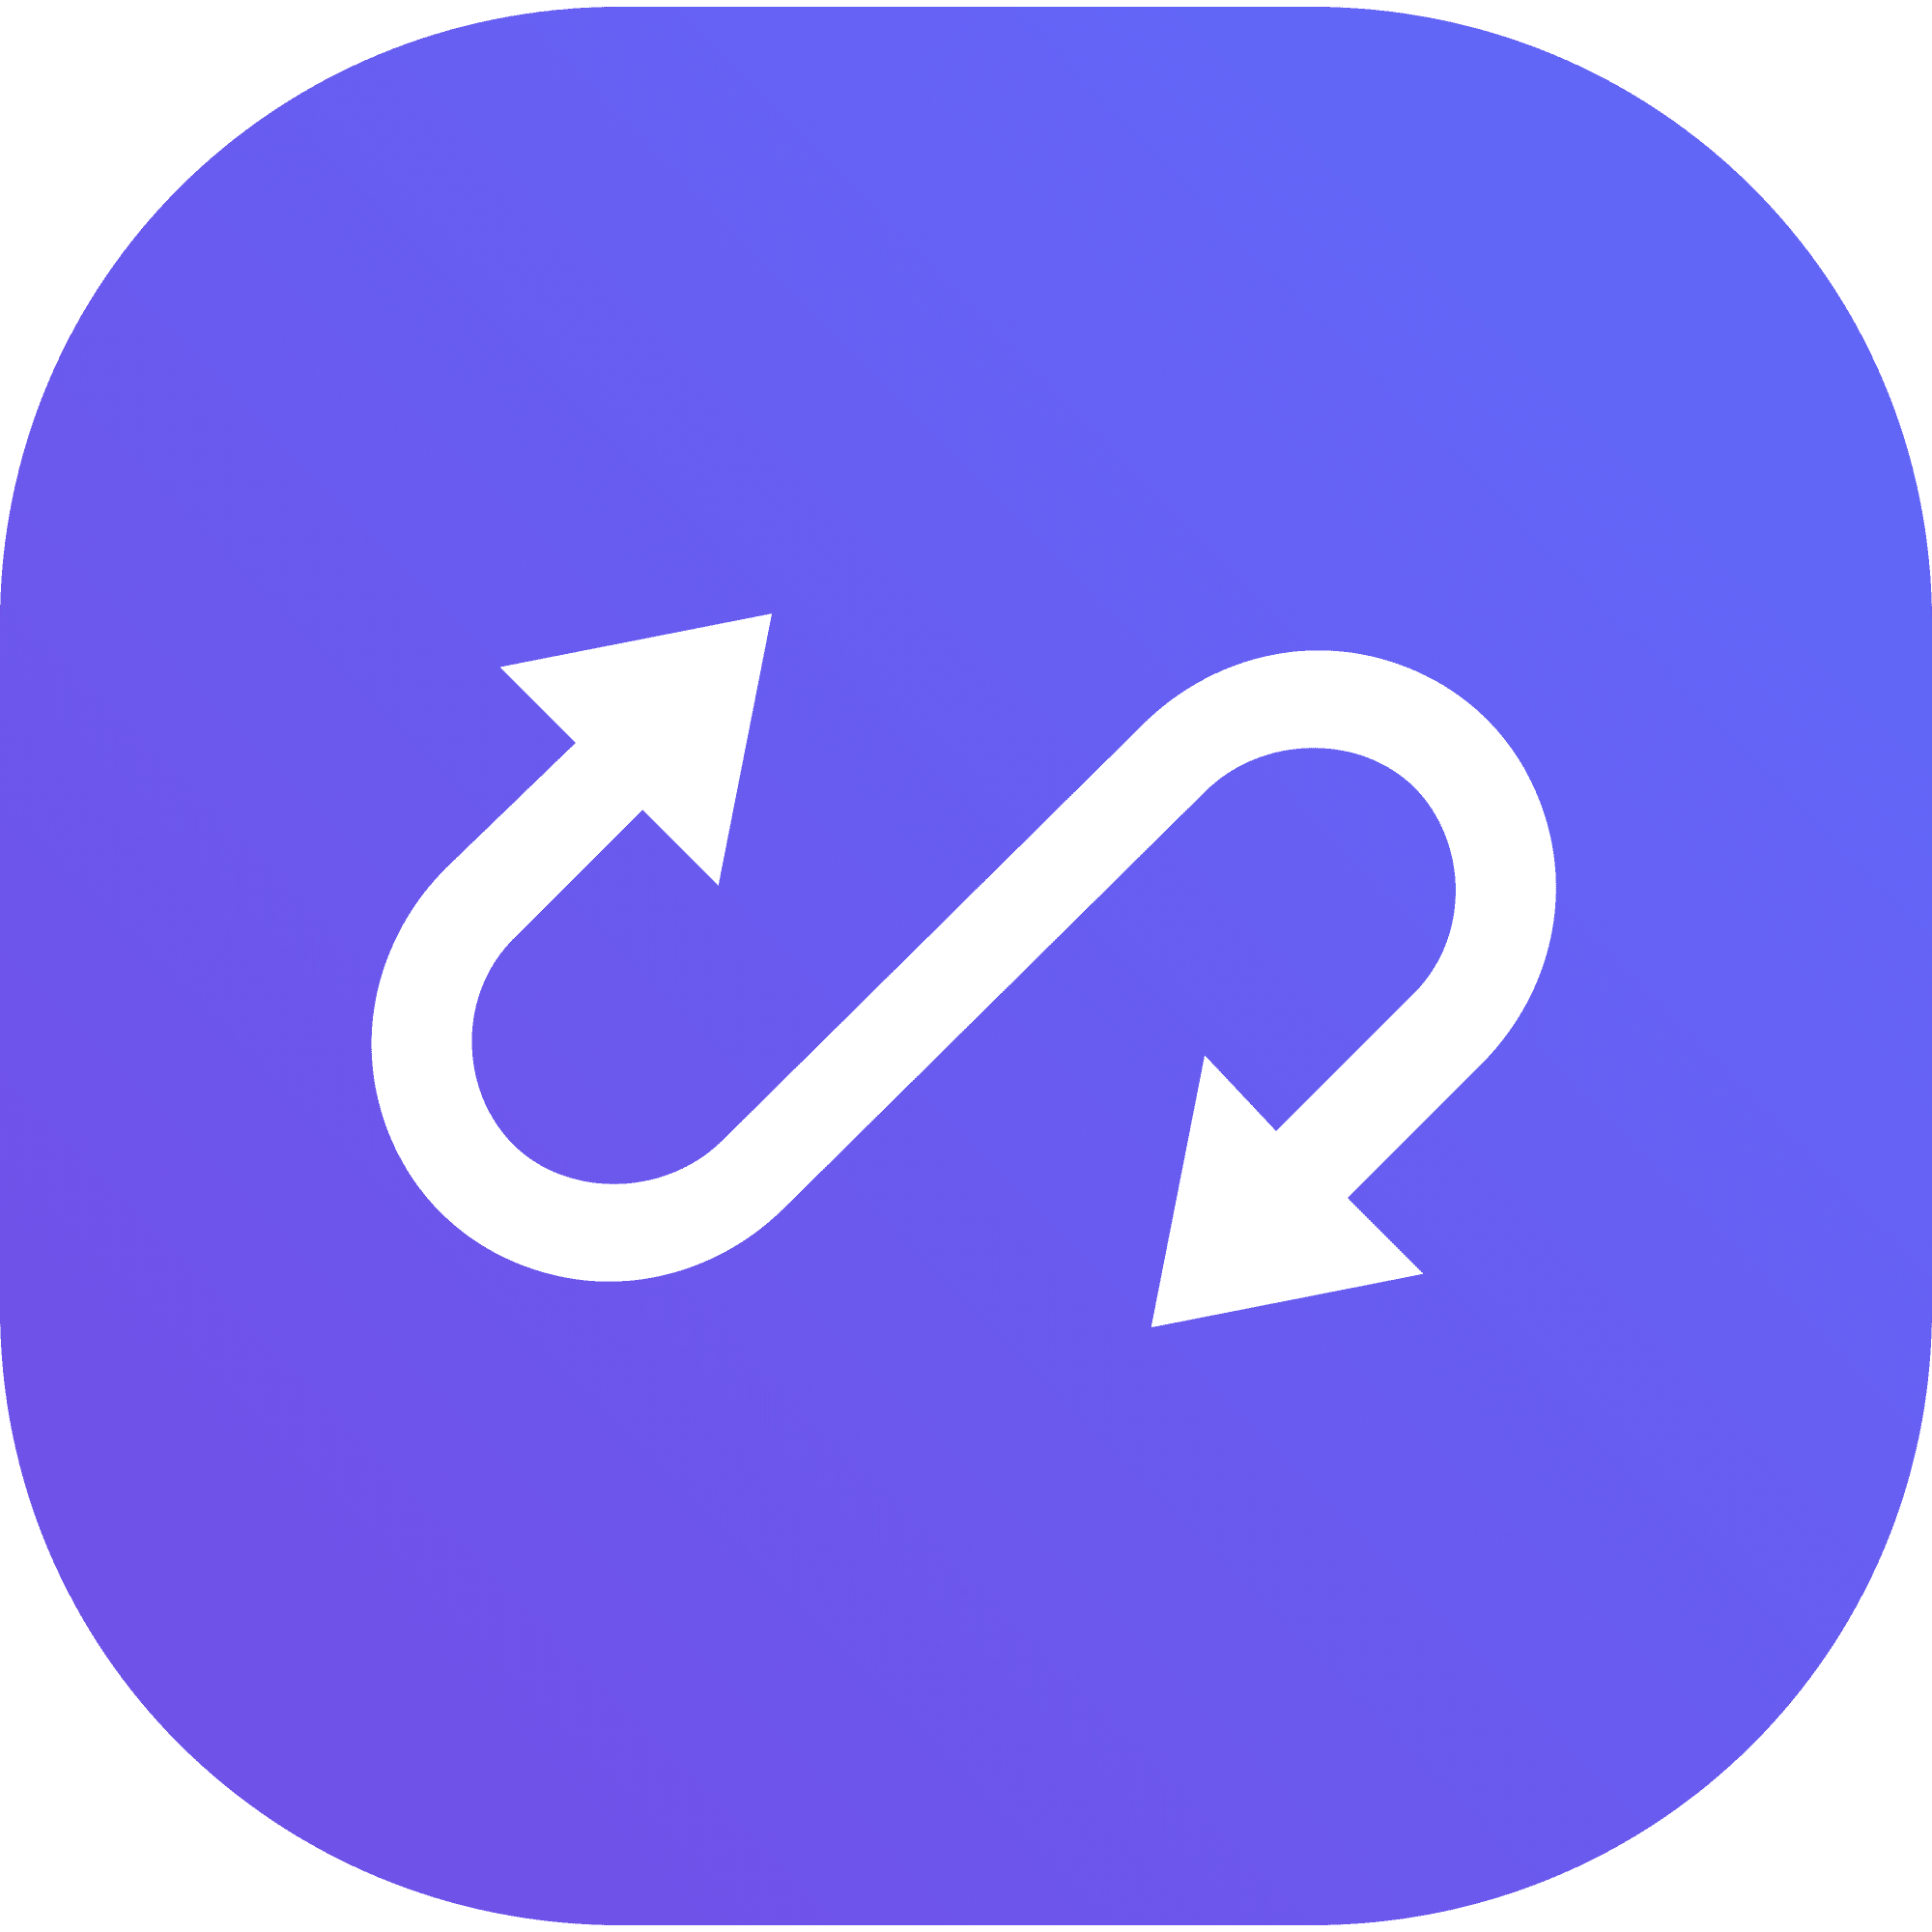 Anyswap logo in png format